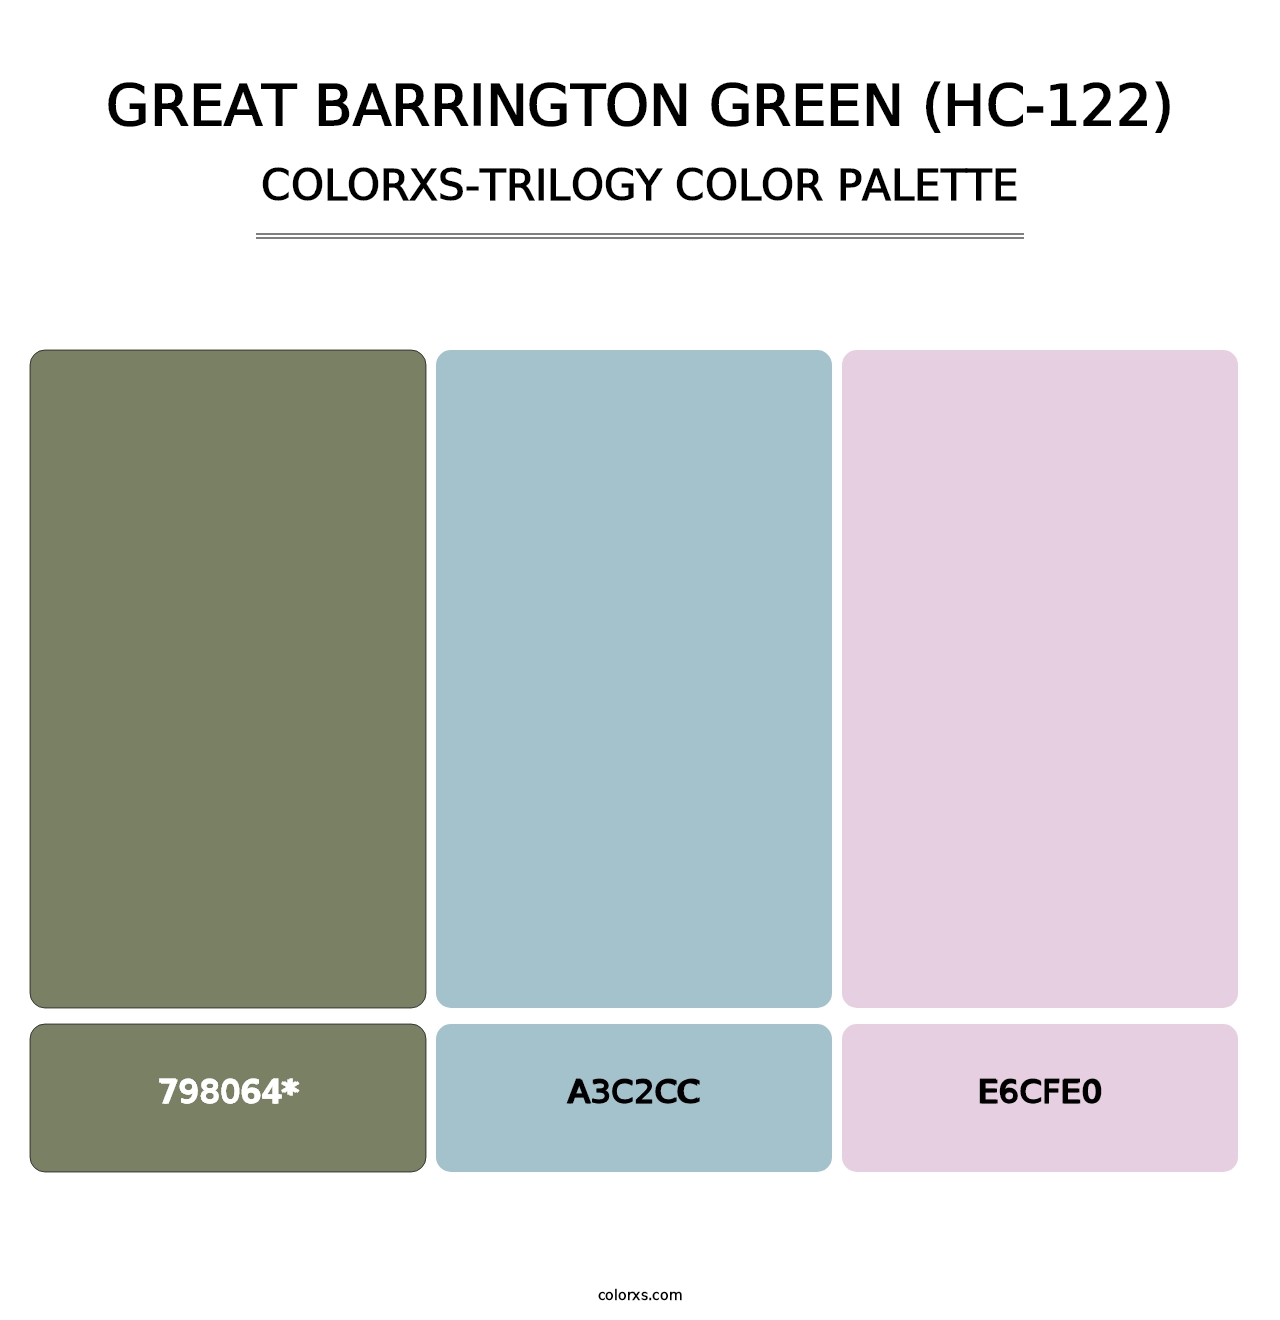 Great Barrington Green (HC-122) - Colorxs Trilogy Palette